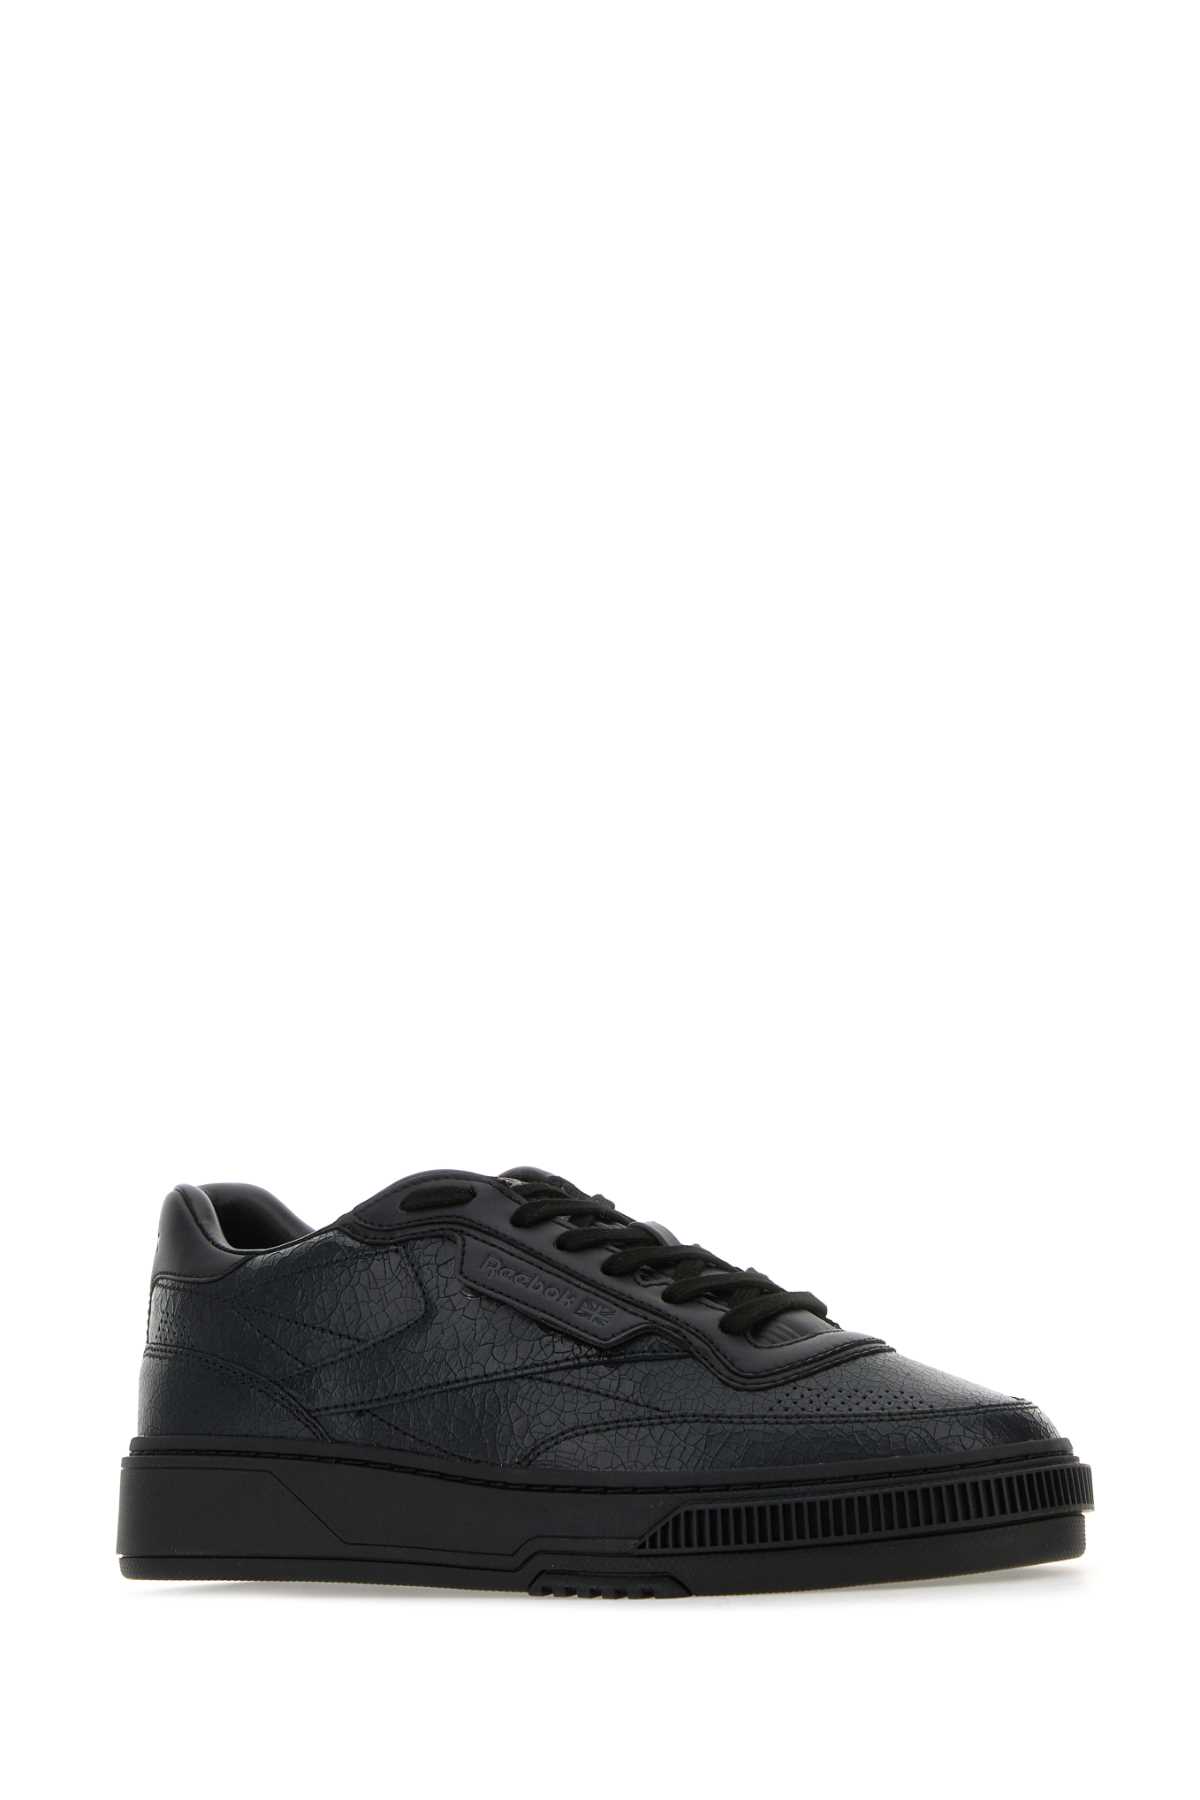 Shop Reebok Black Leather Club C Ltd Sneakers